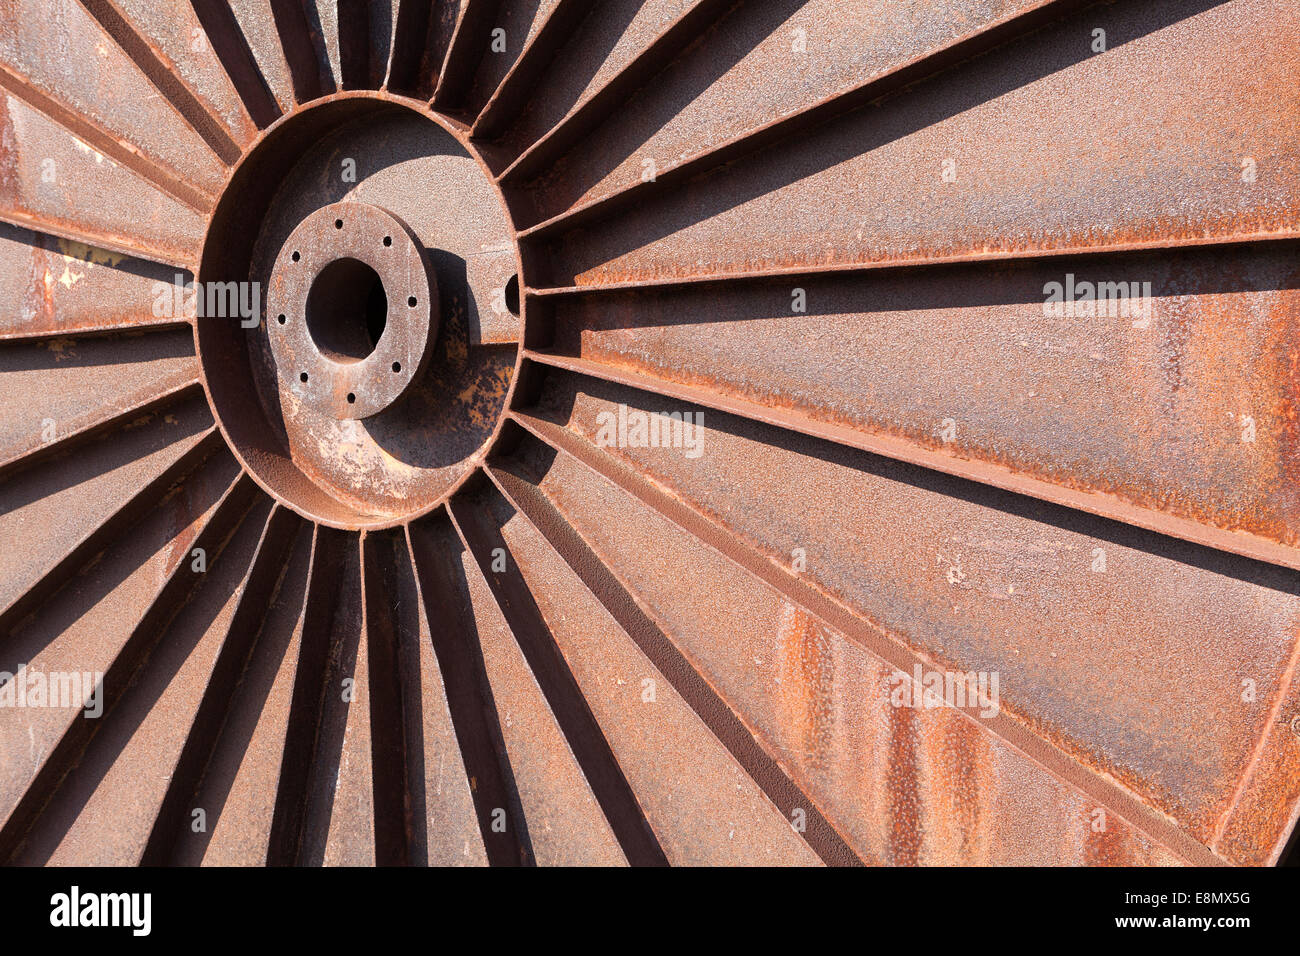 Rusty iron parts, Stock Photo